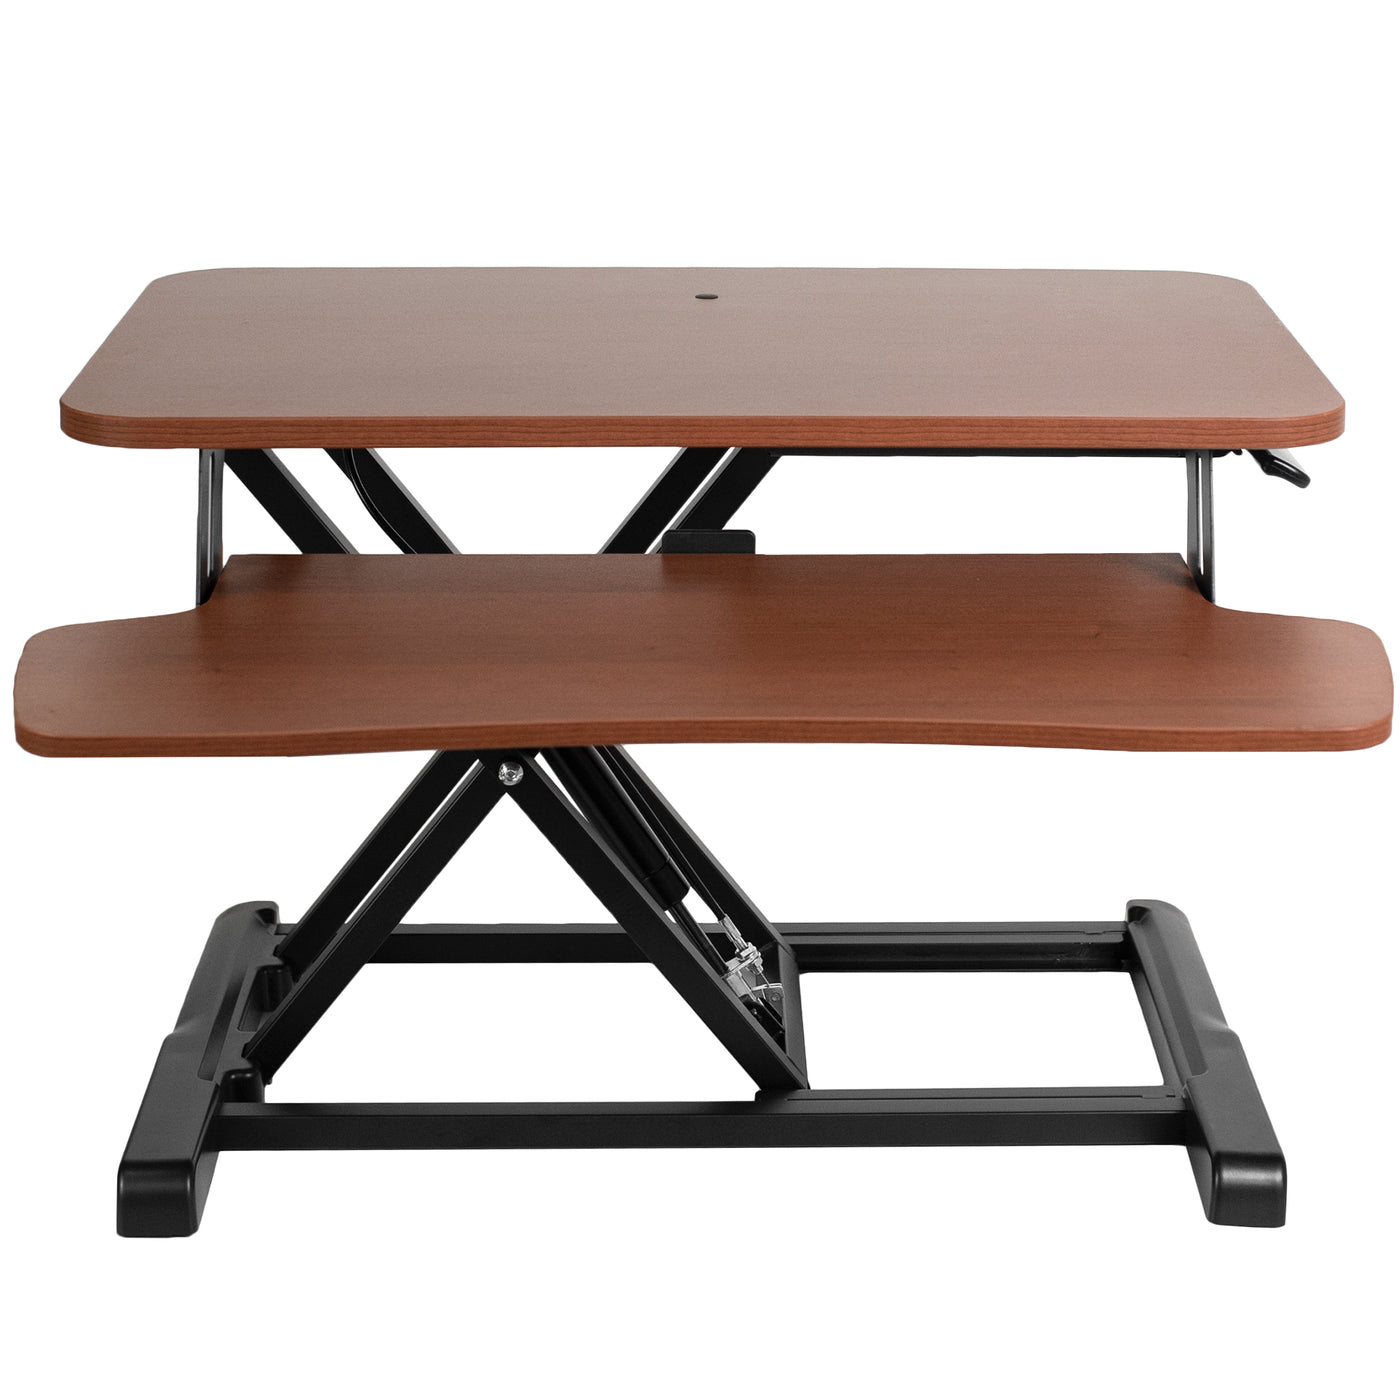 Heavy-duty height adjustable desk converter platform with 2 tiers.